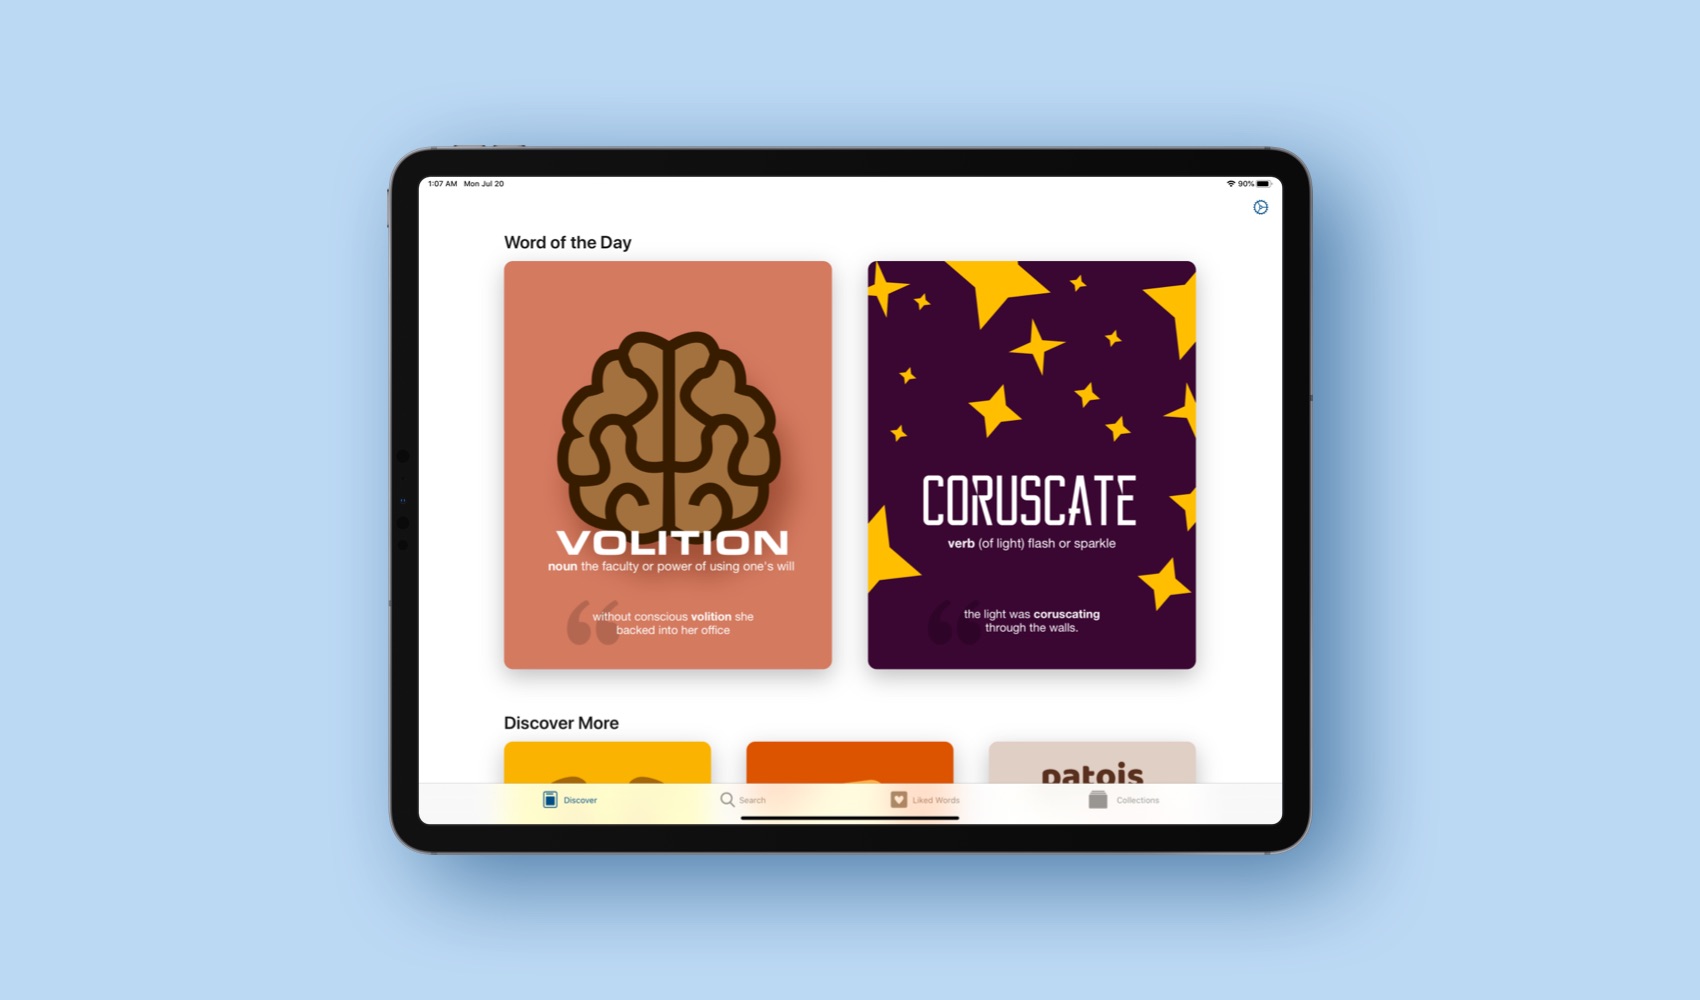 Designed for iPad case study; Image of iPad